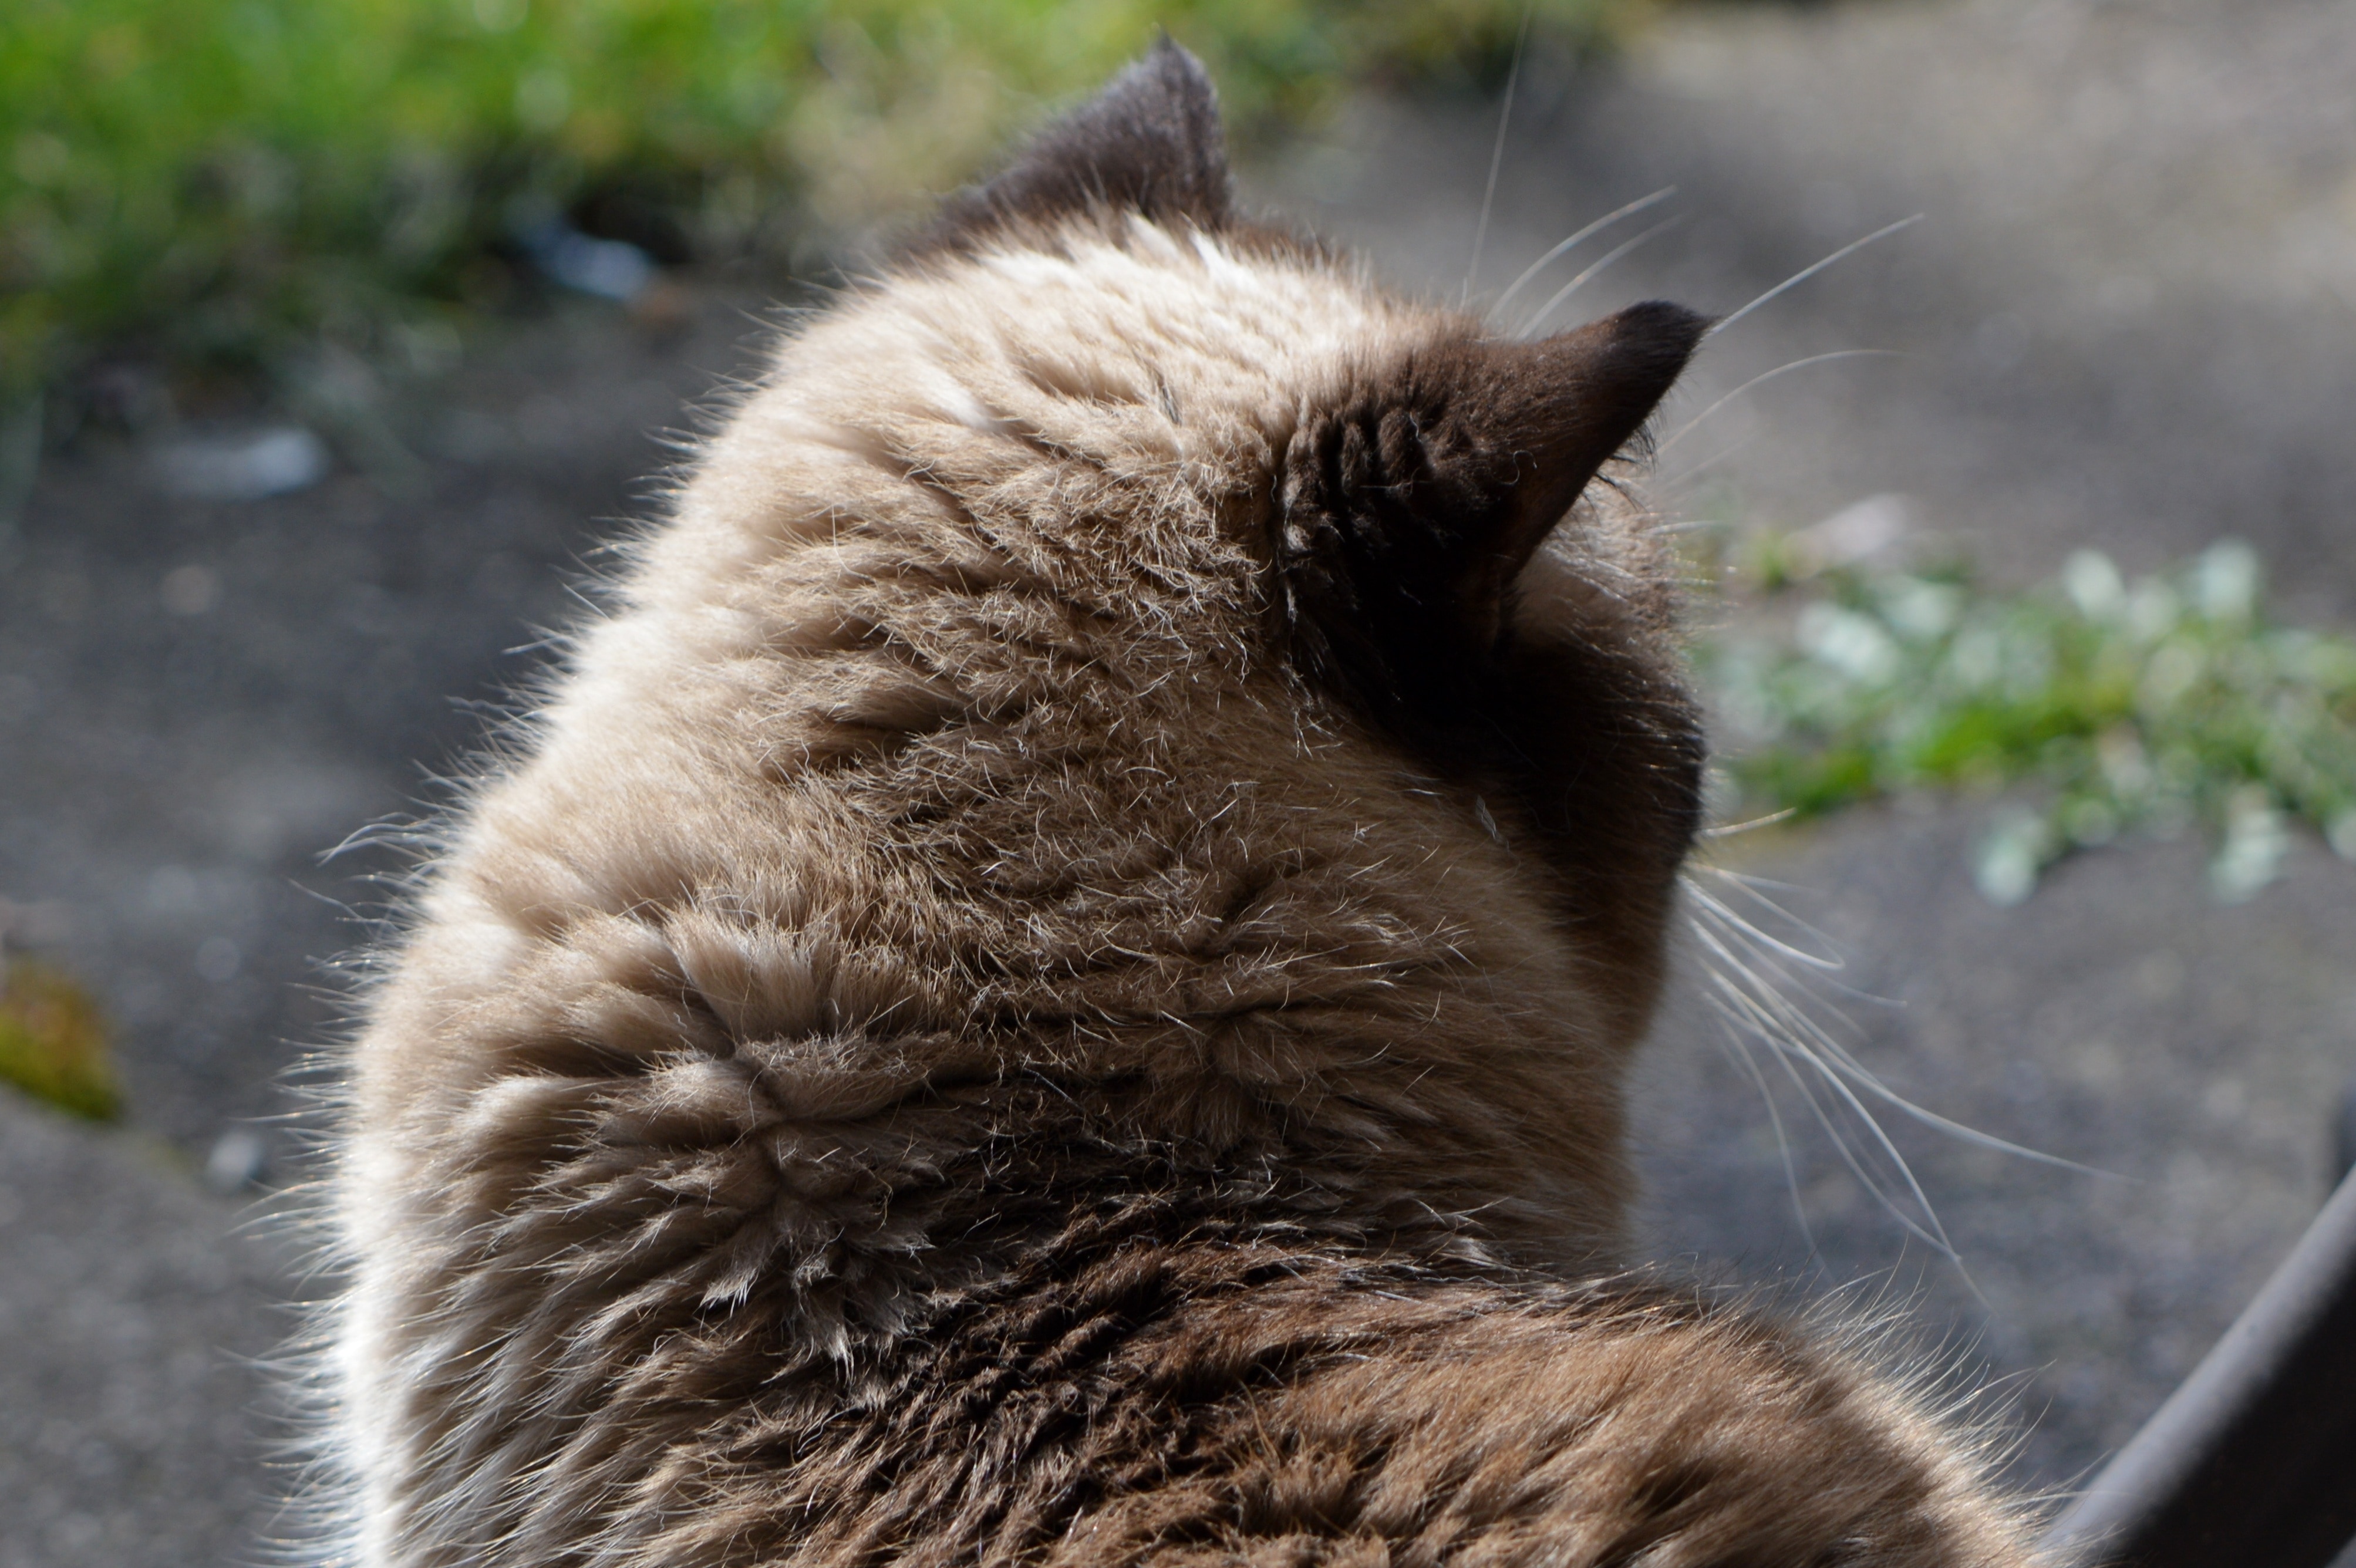 Cat, British Shorthair, Beige, Brown, one animal, animal themes